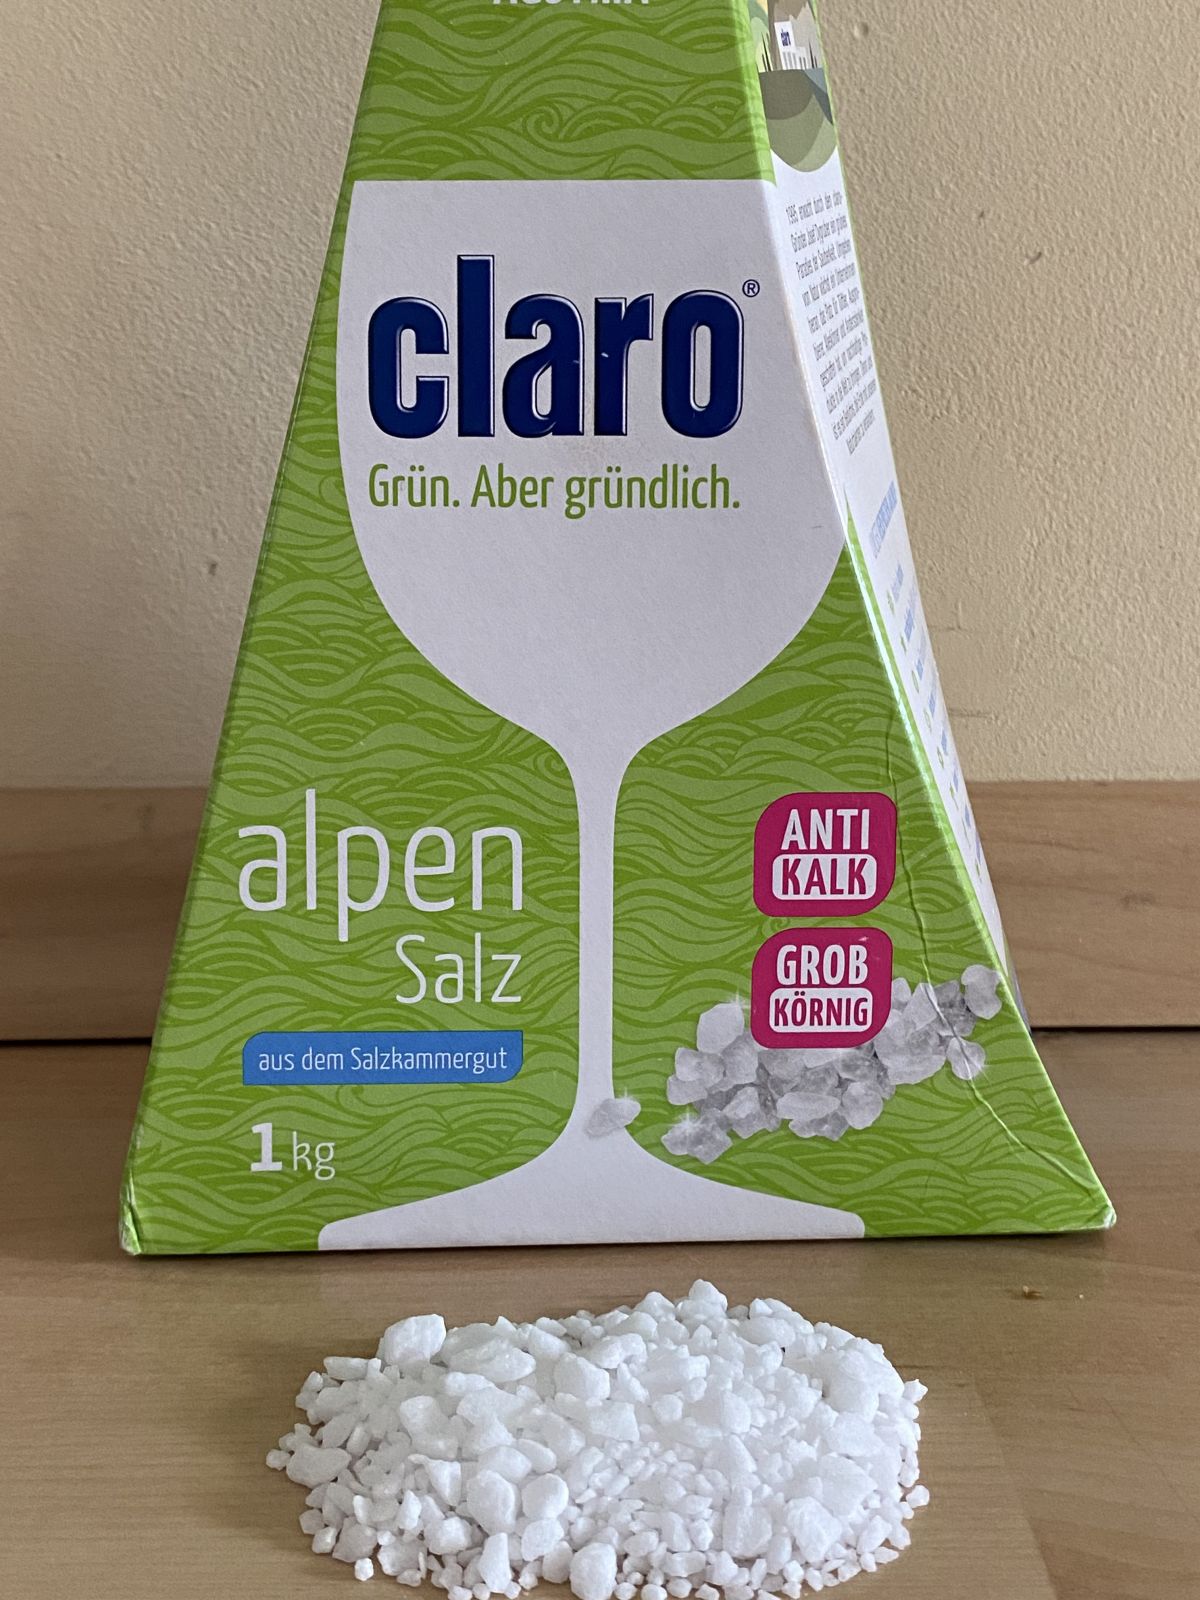 Сlaro Eco salt